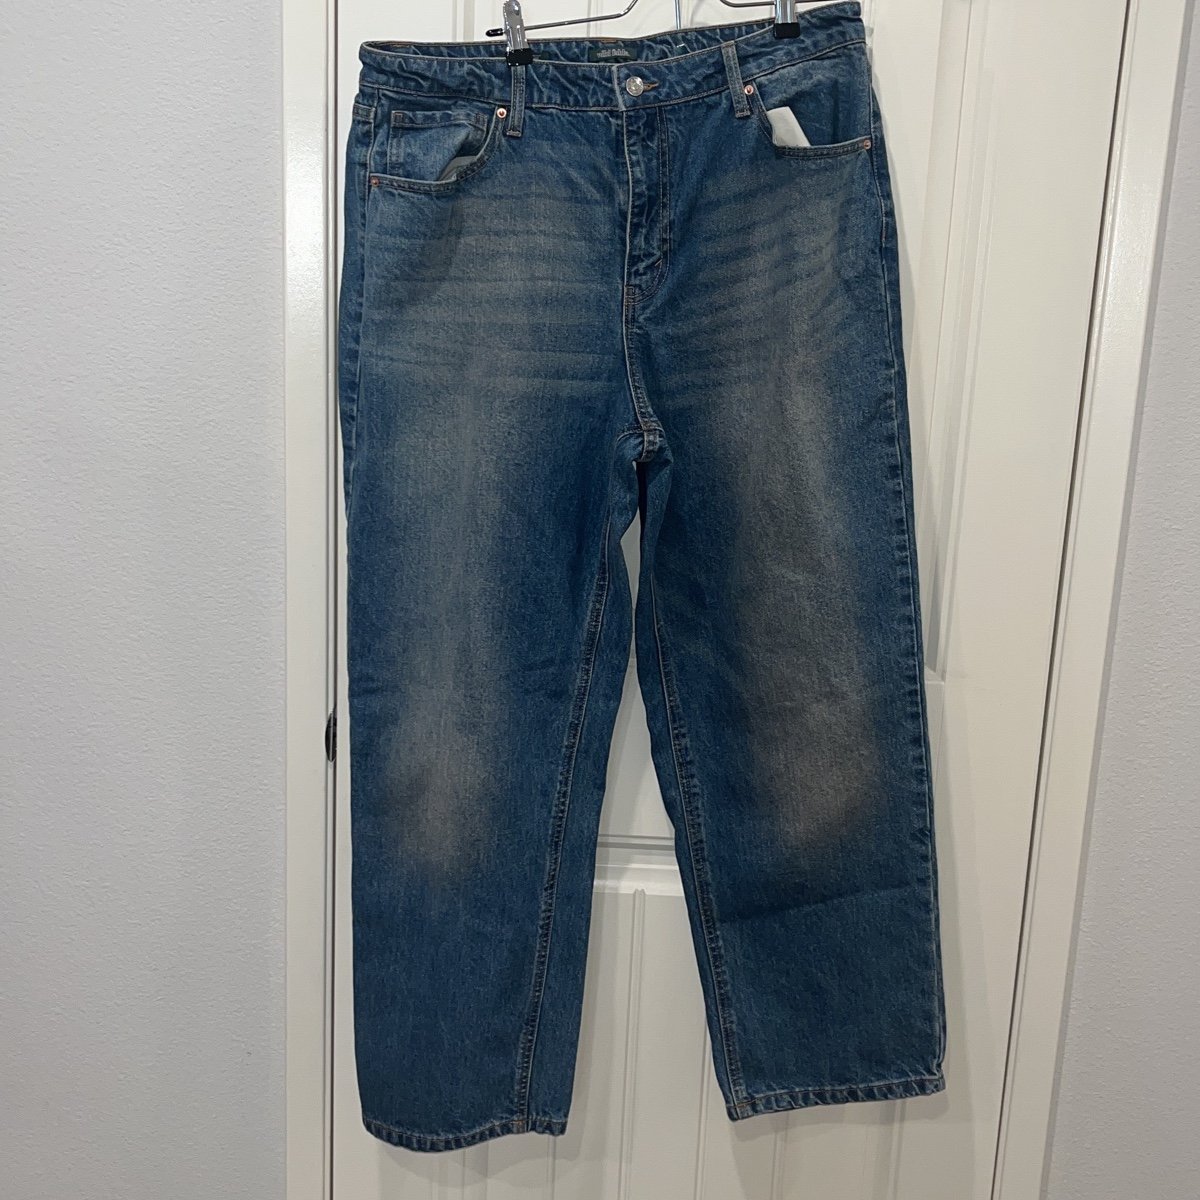 Wholesale price Wild Fable Jeans 16 oABMq5HgN Online Shop